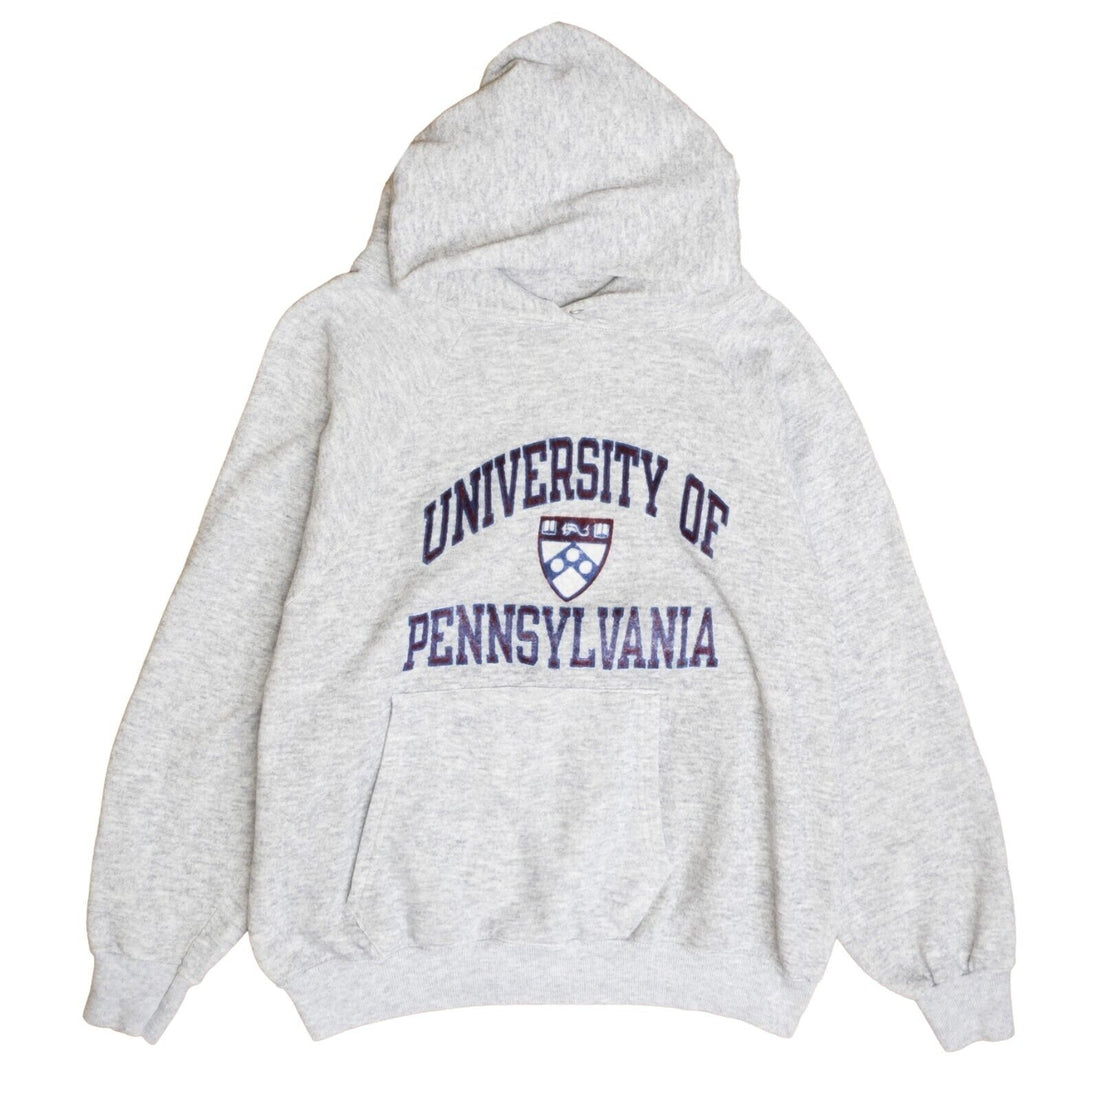 Vintage University of Pennsylvania Champion Sweatshirt Hoodie Size Large 80s